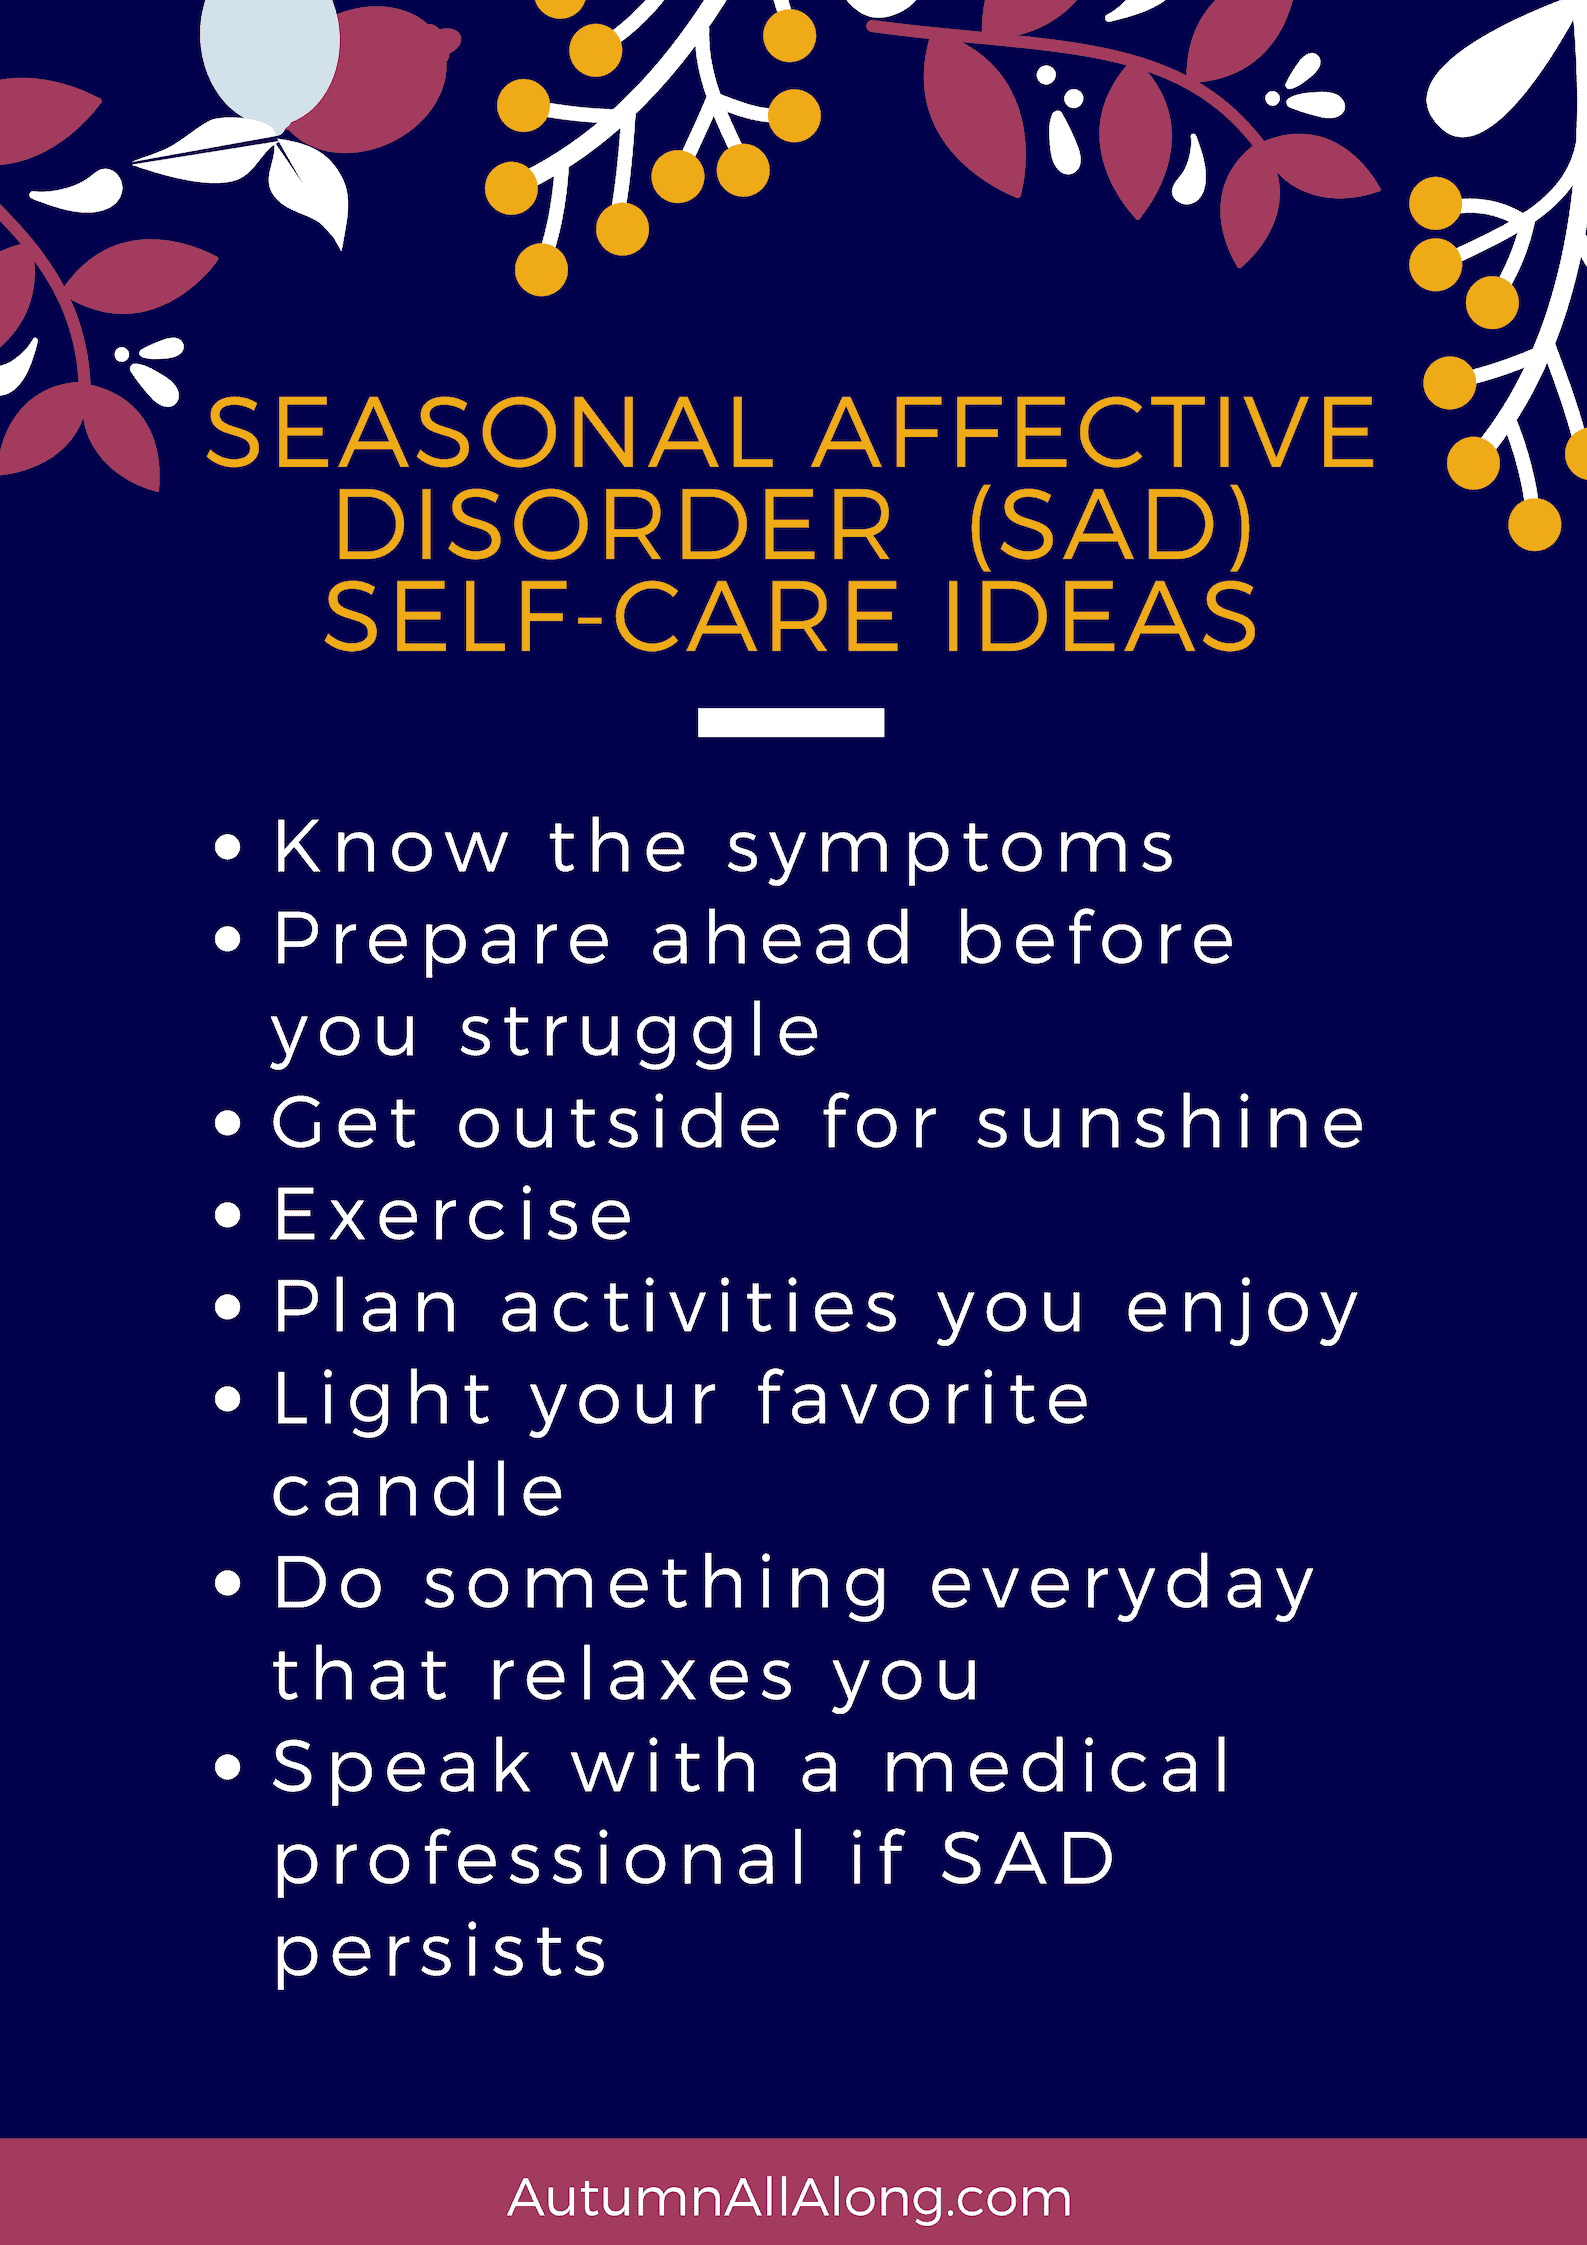 Seasonal Affective Disorder Self-care Ideas | via Autumn All Along